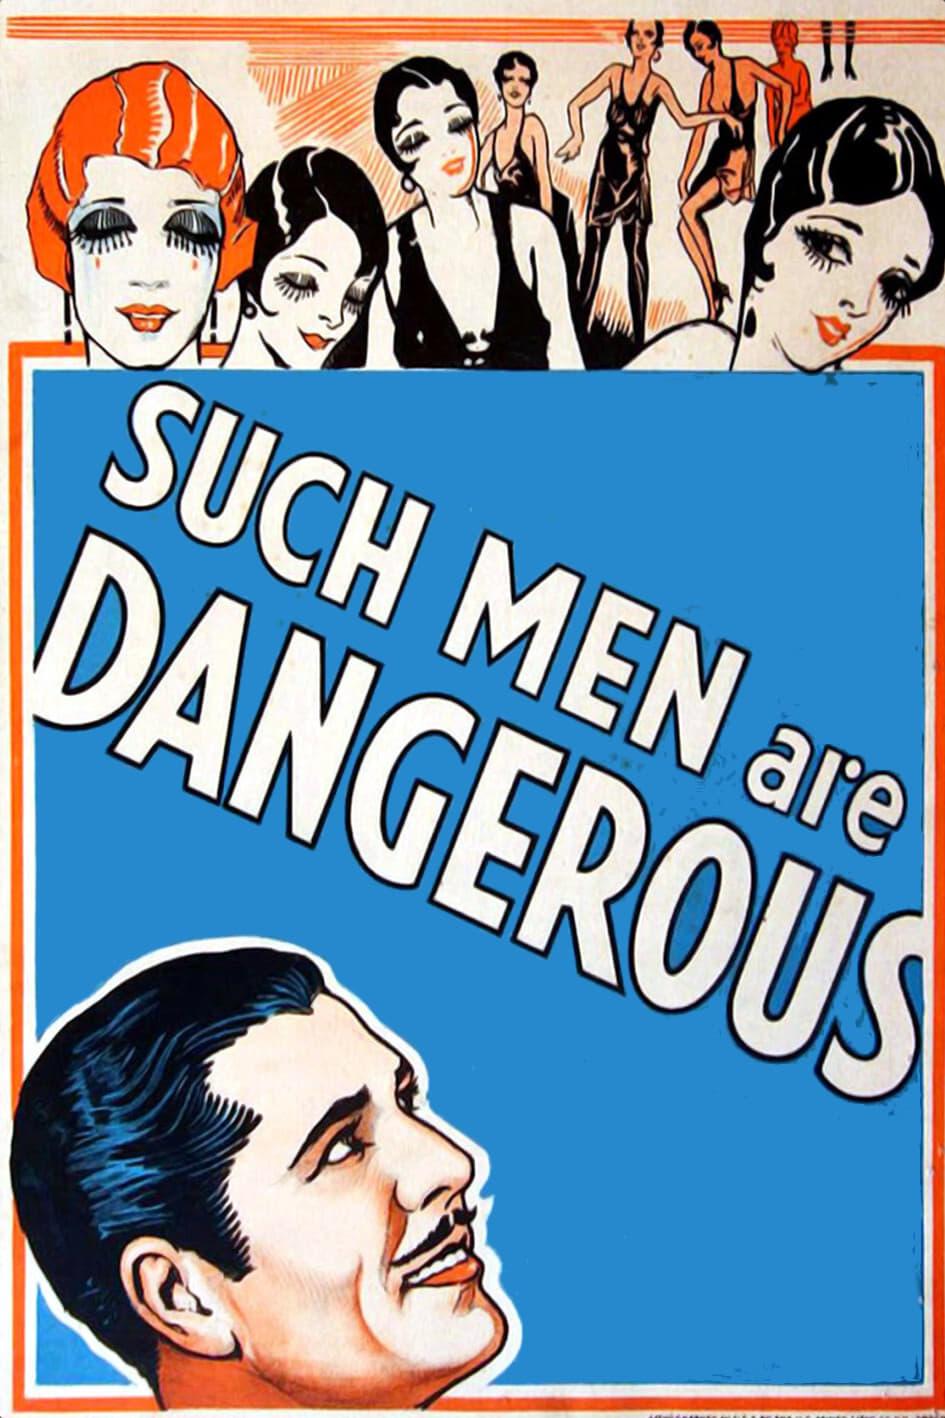 Such Men Are Dangerous poster